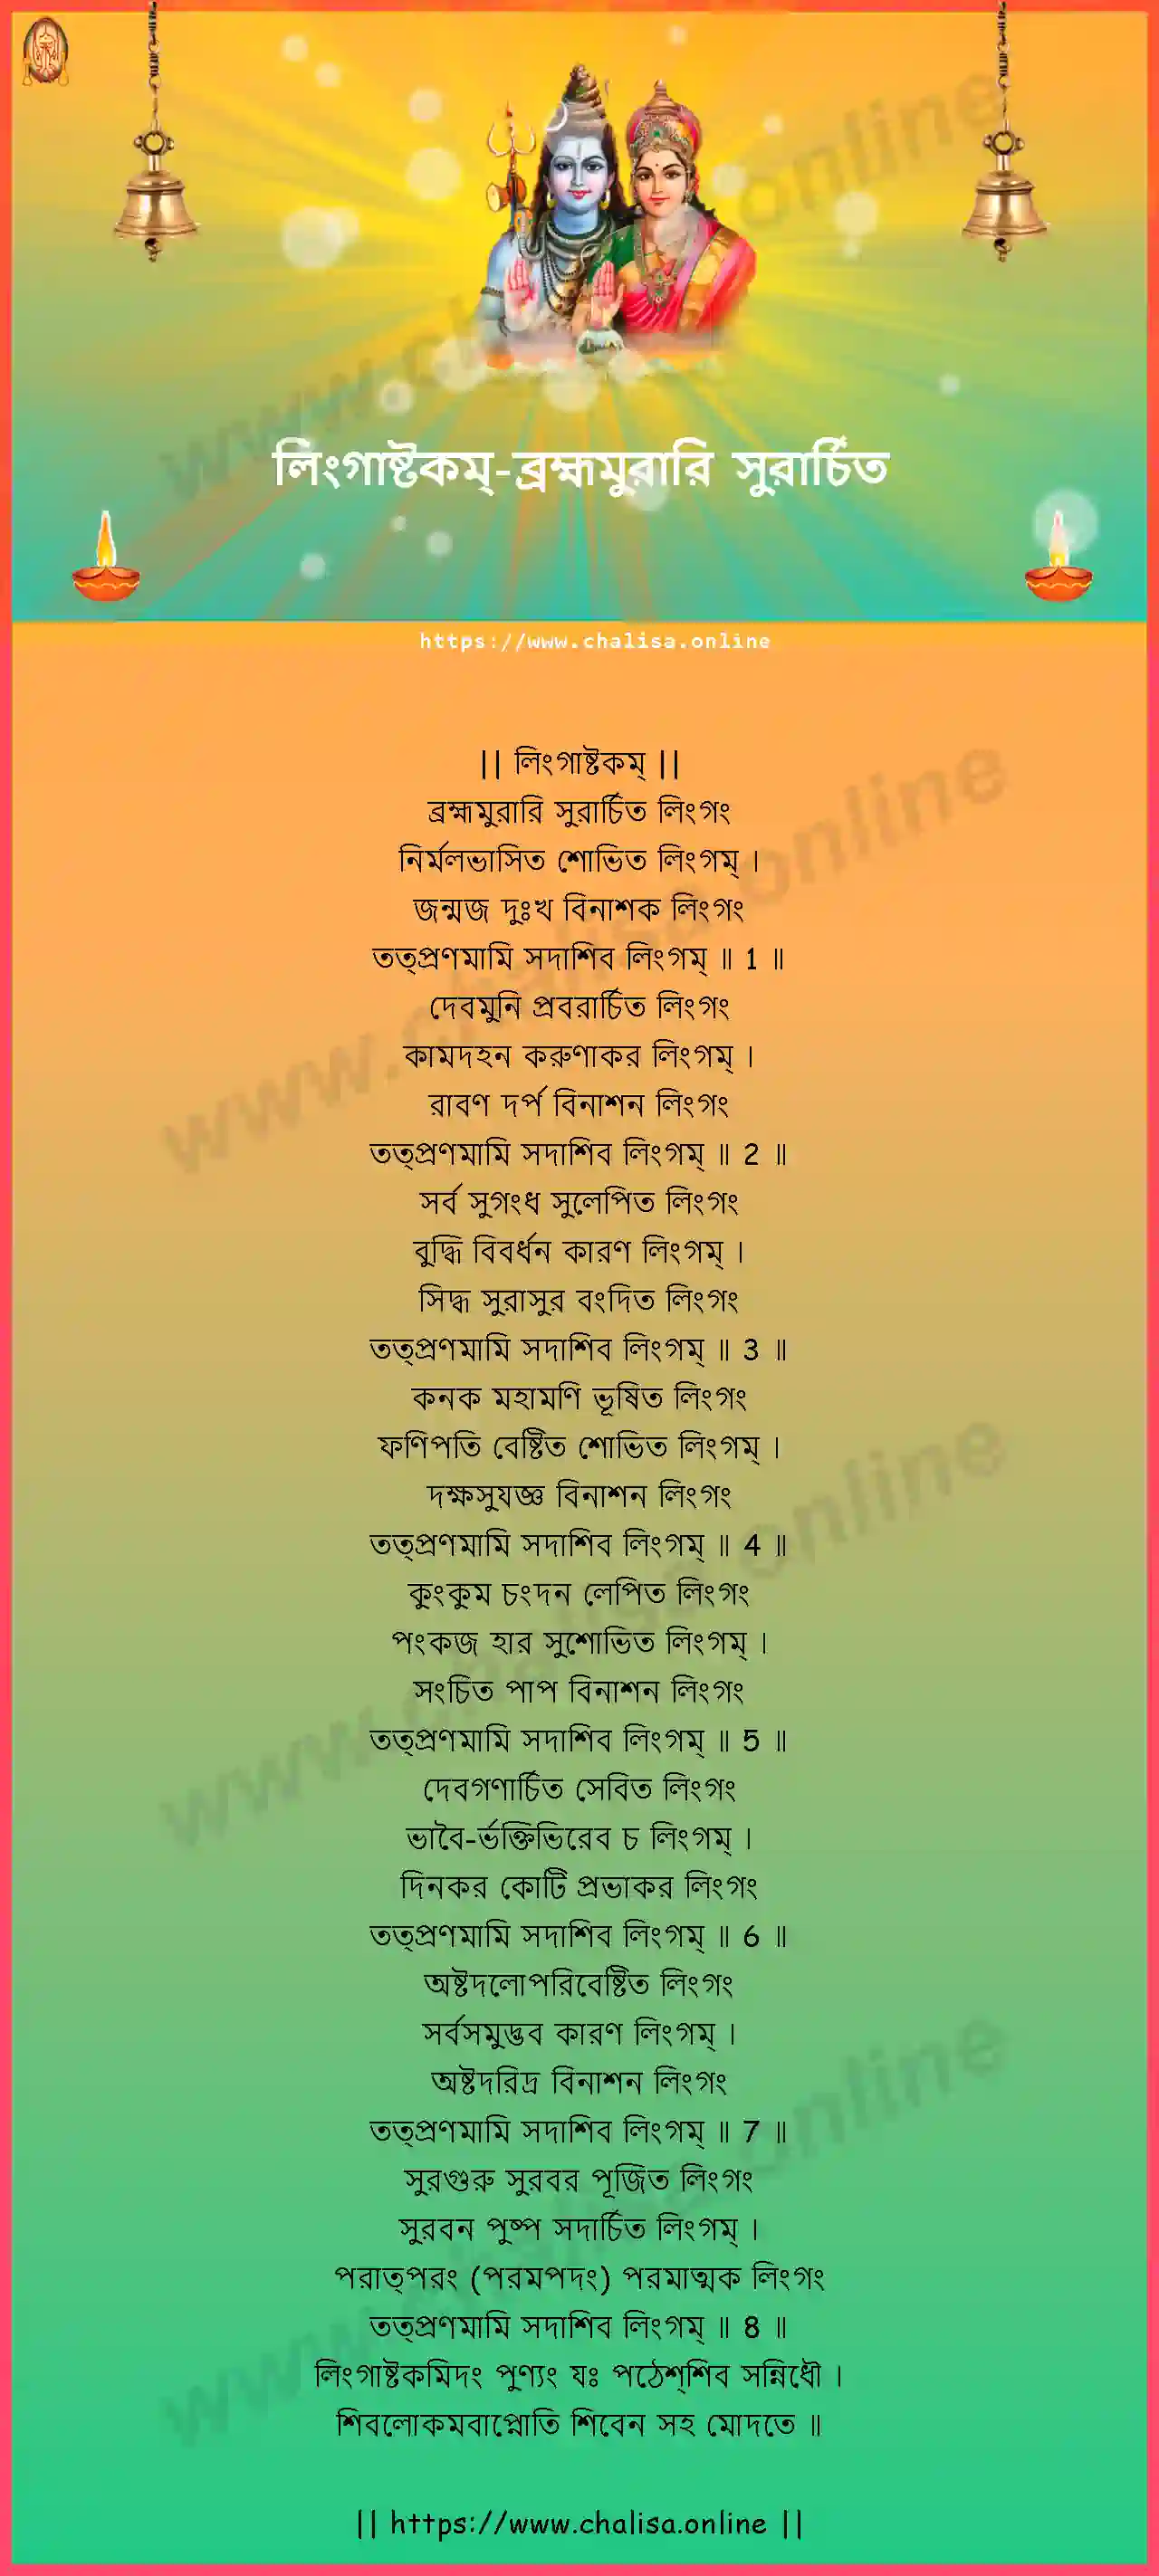 brahmamurari-surarchita-lingashtakam-bengali-bengali-lyrics-download